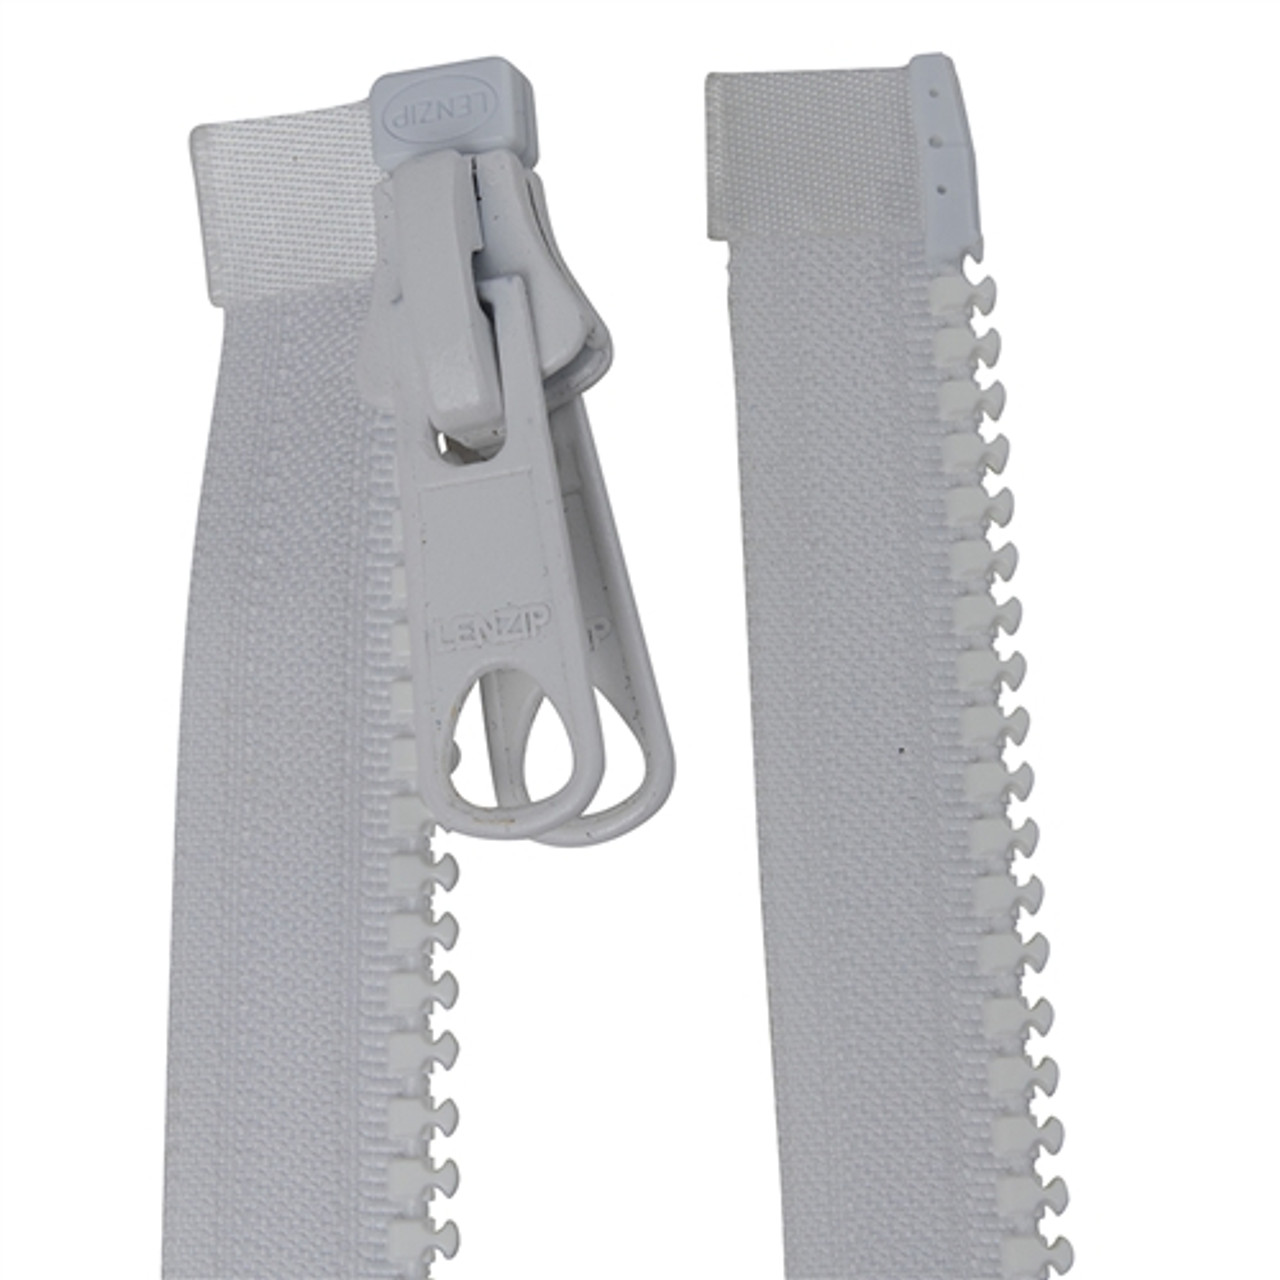 Lenzip #8 Zipper Separating Vislon LIFETIME GUARANTEE